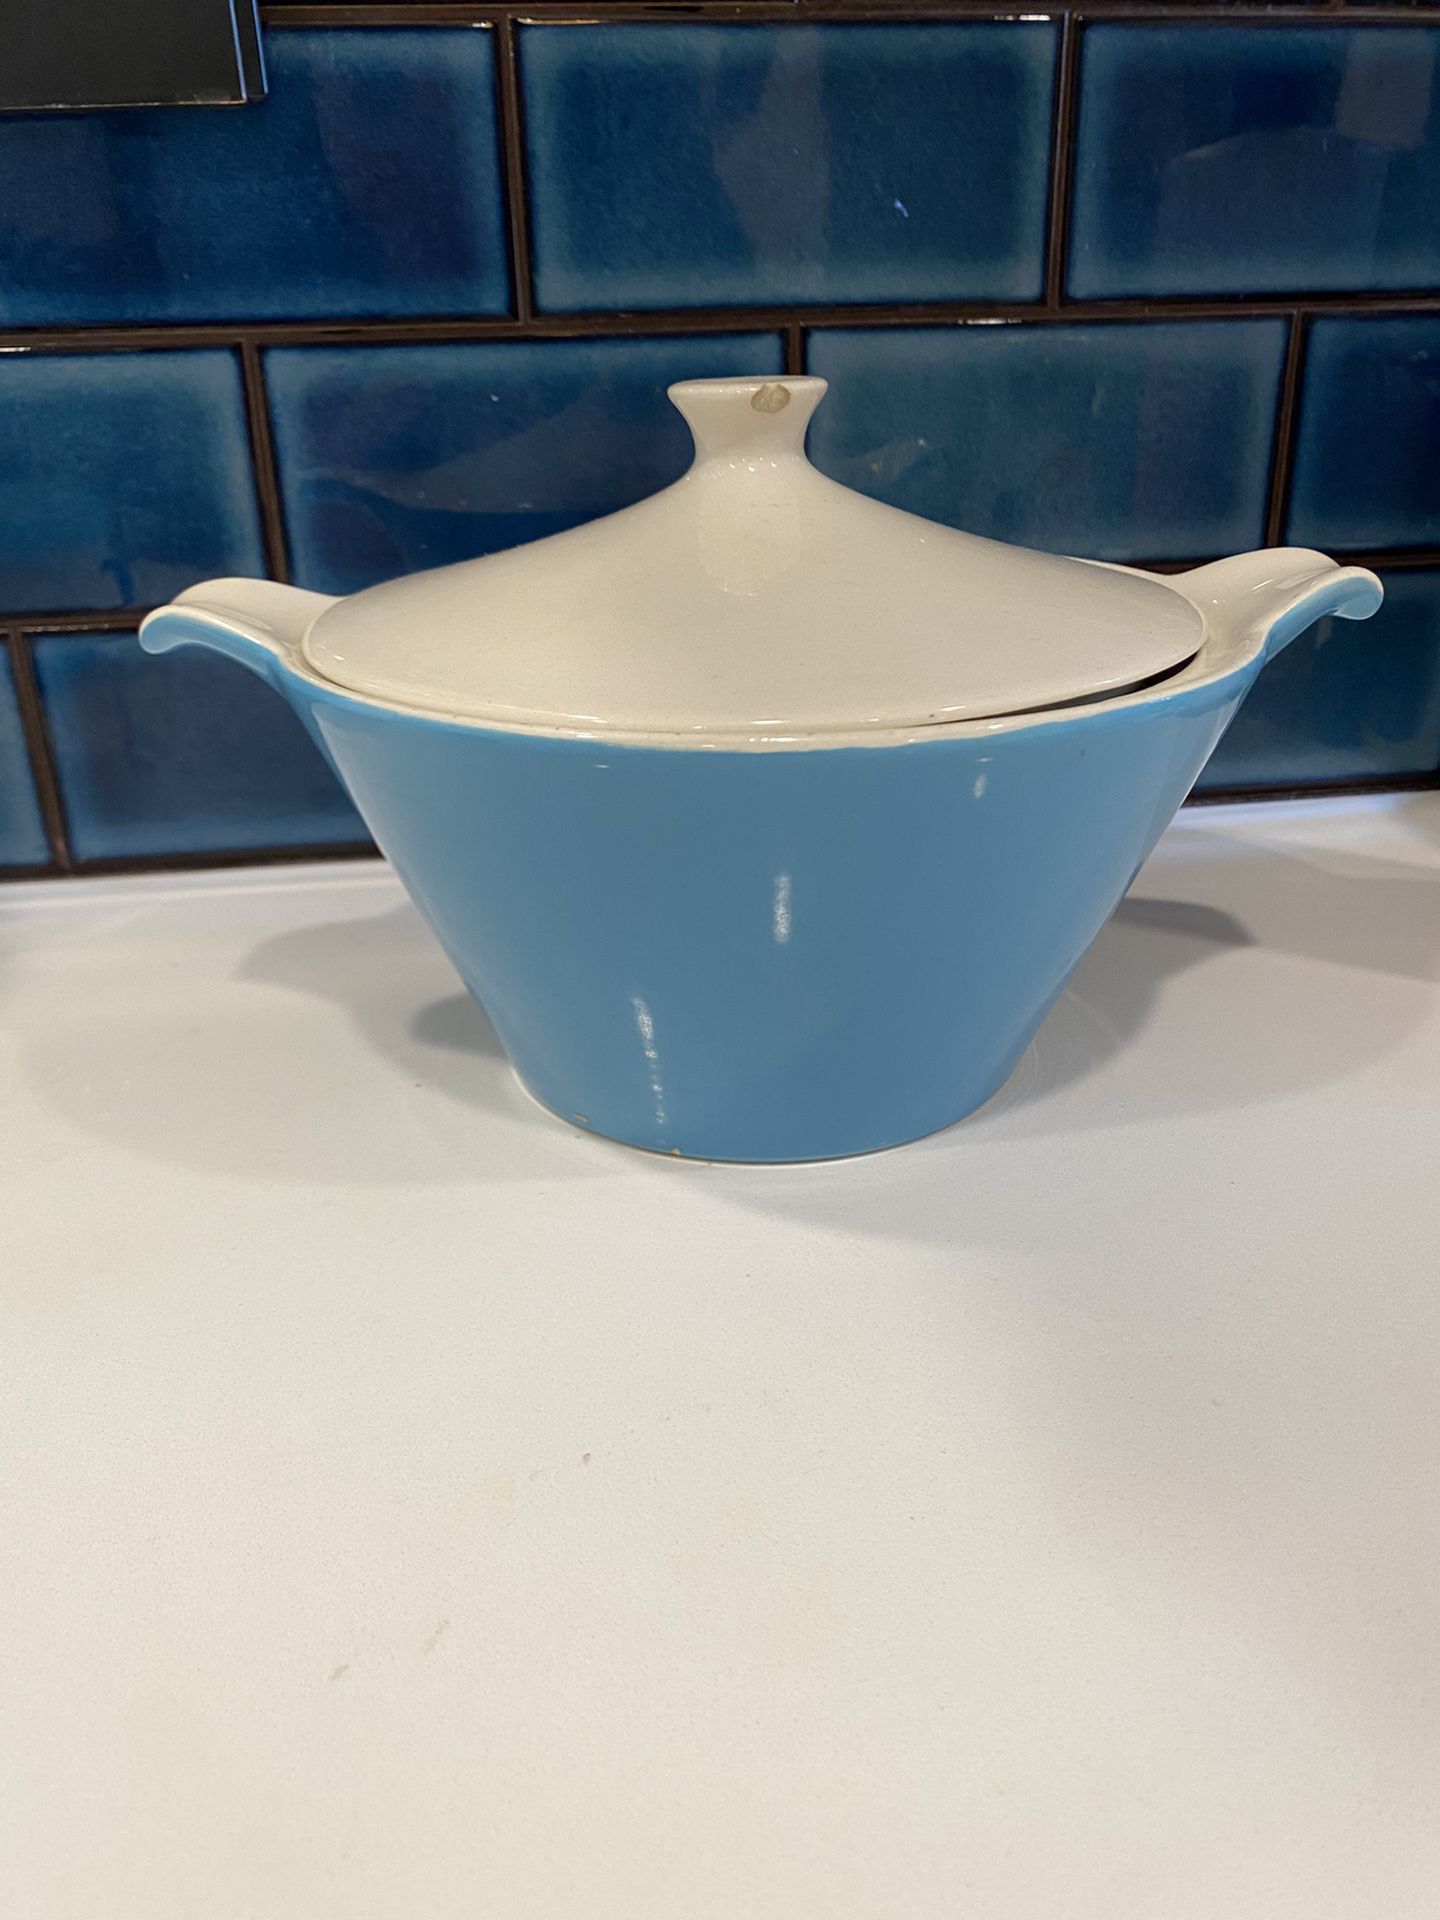 Vintage serving bowl with lid